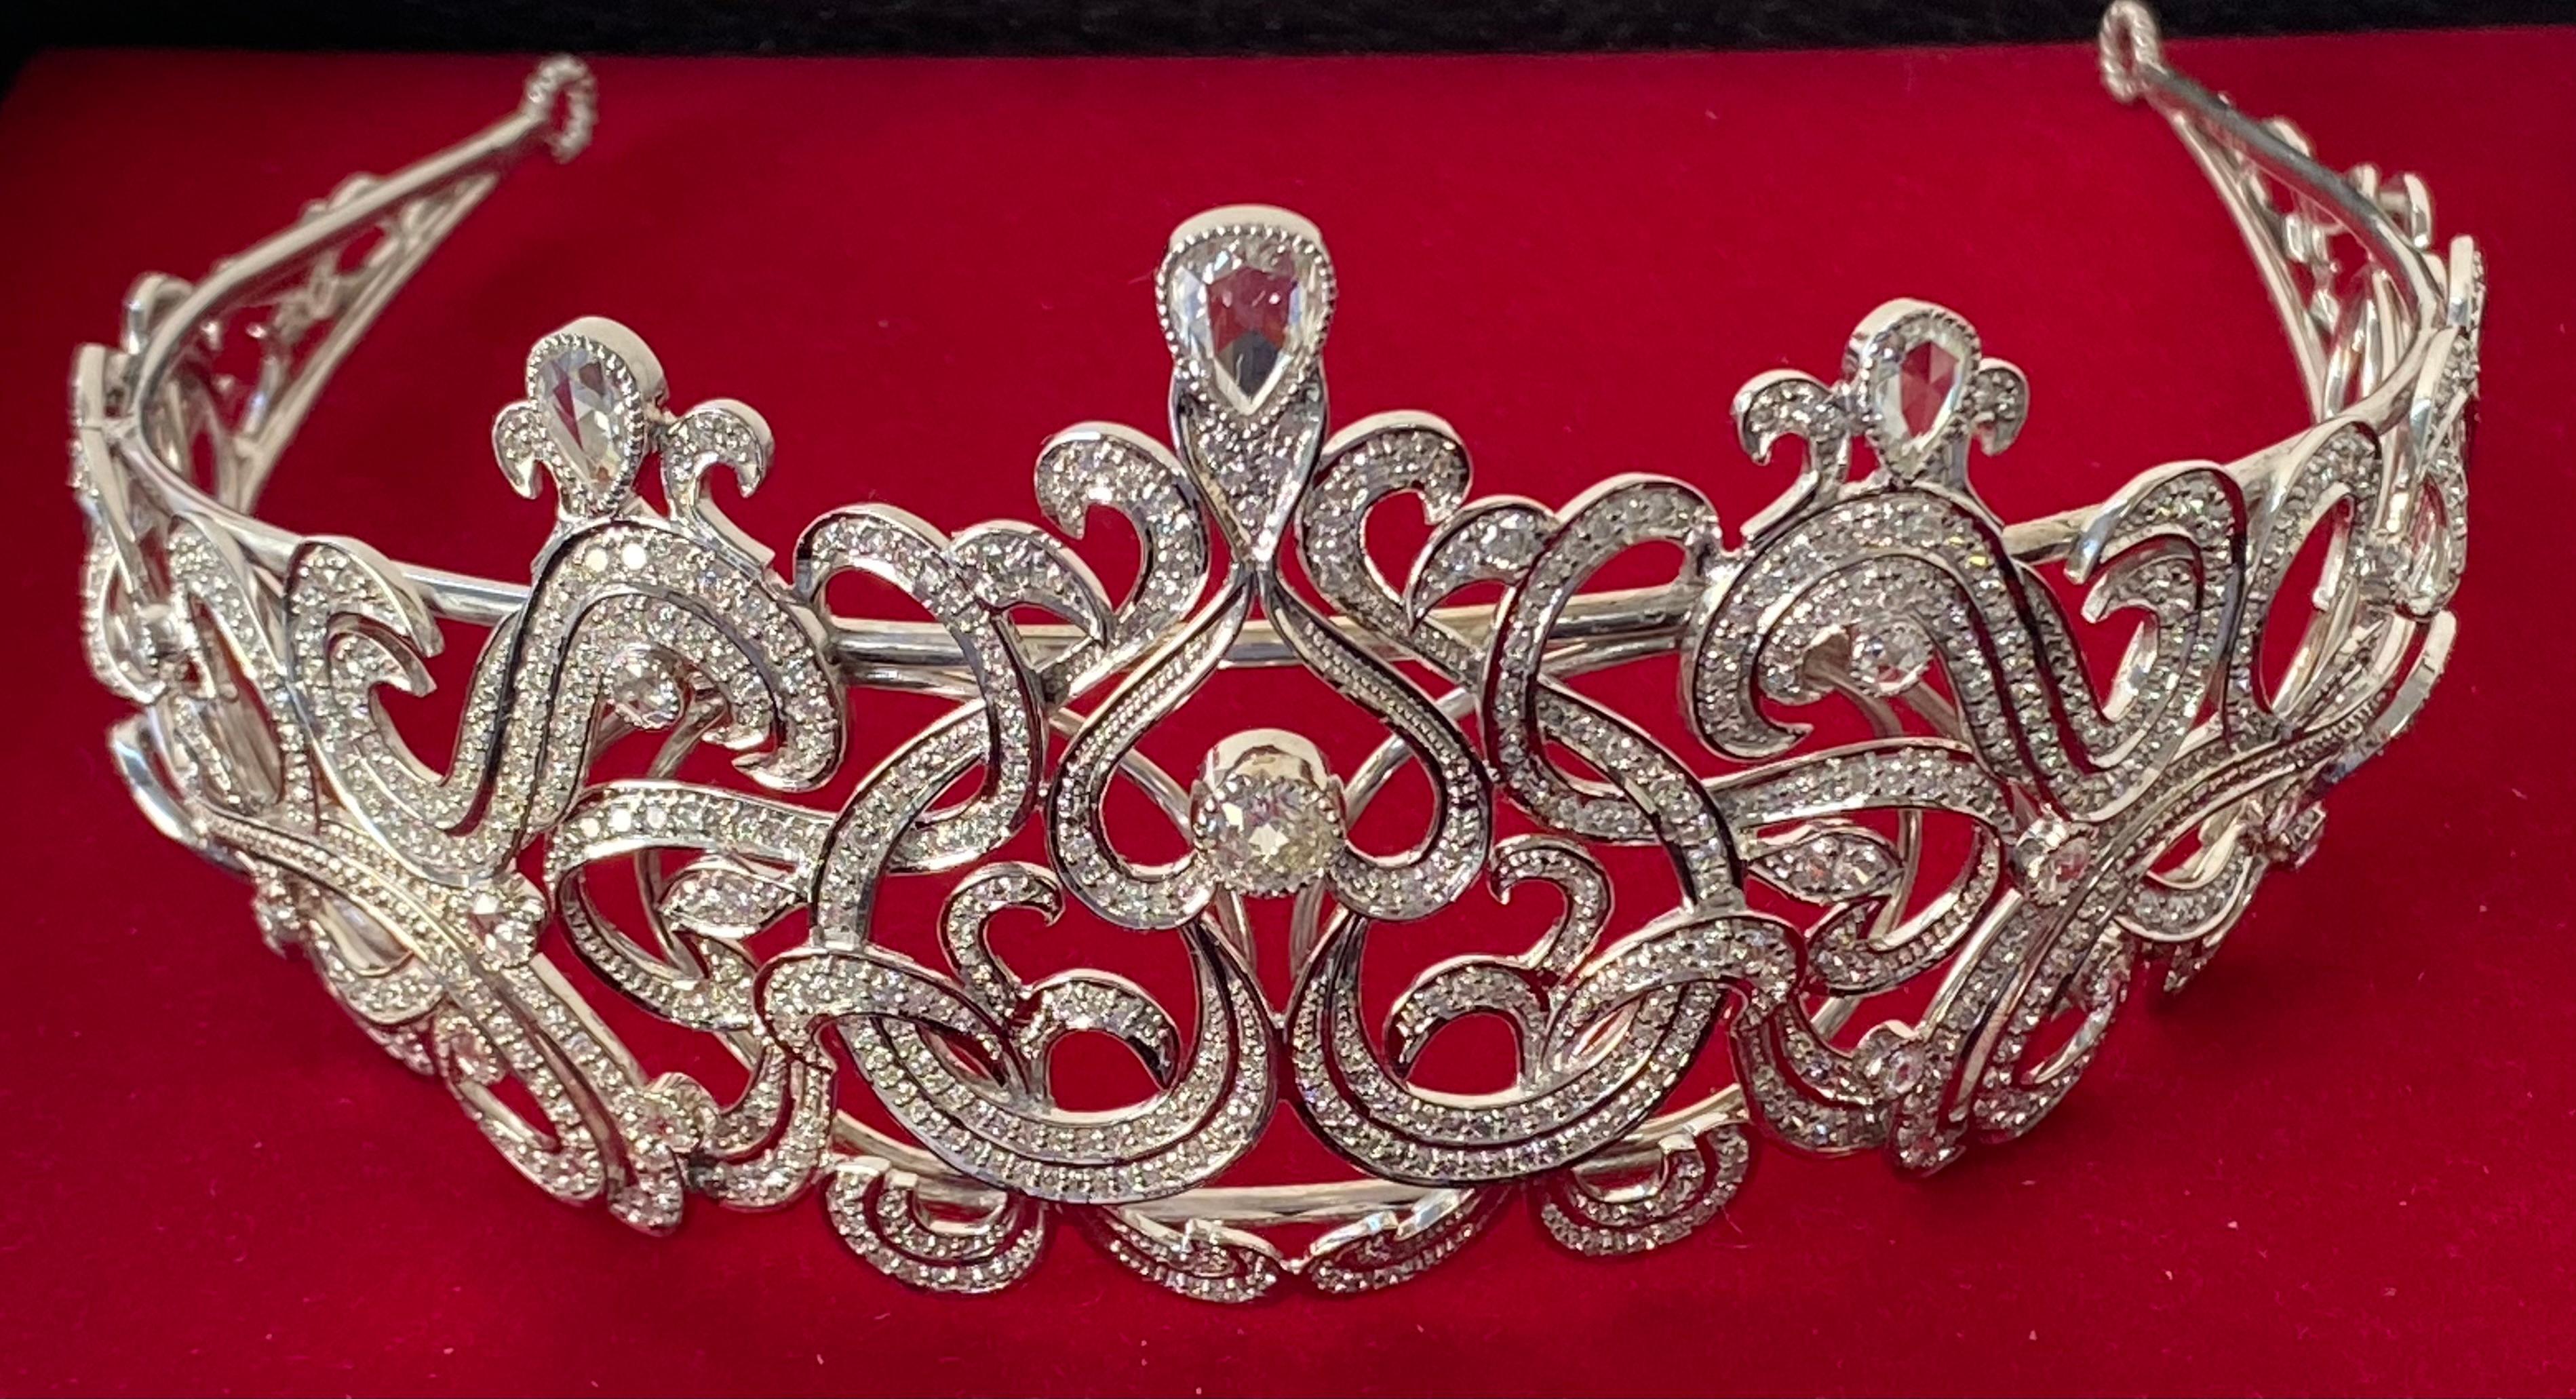 Women's Crown Jubilee Diamond Tiara Encrusted with Diamonds Weighing 16.67ct  For Sale